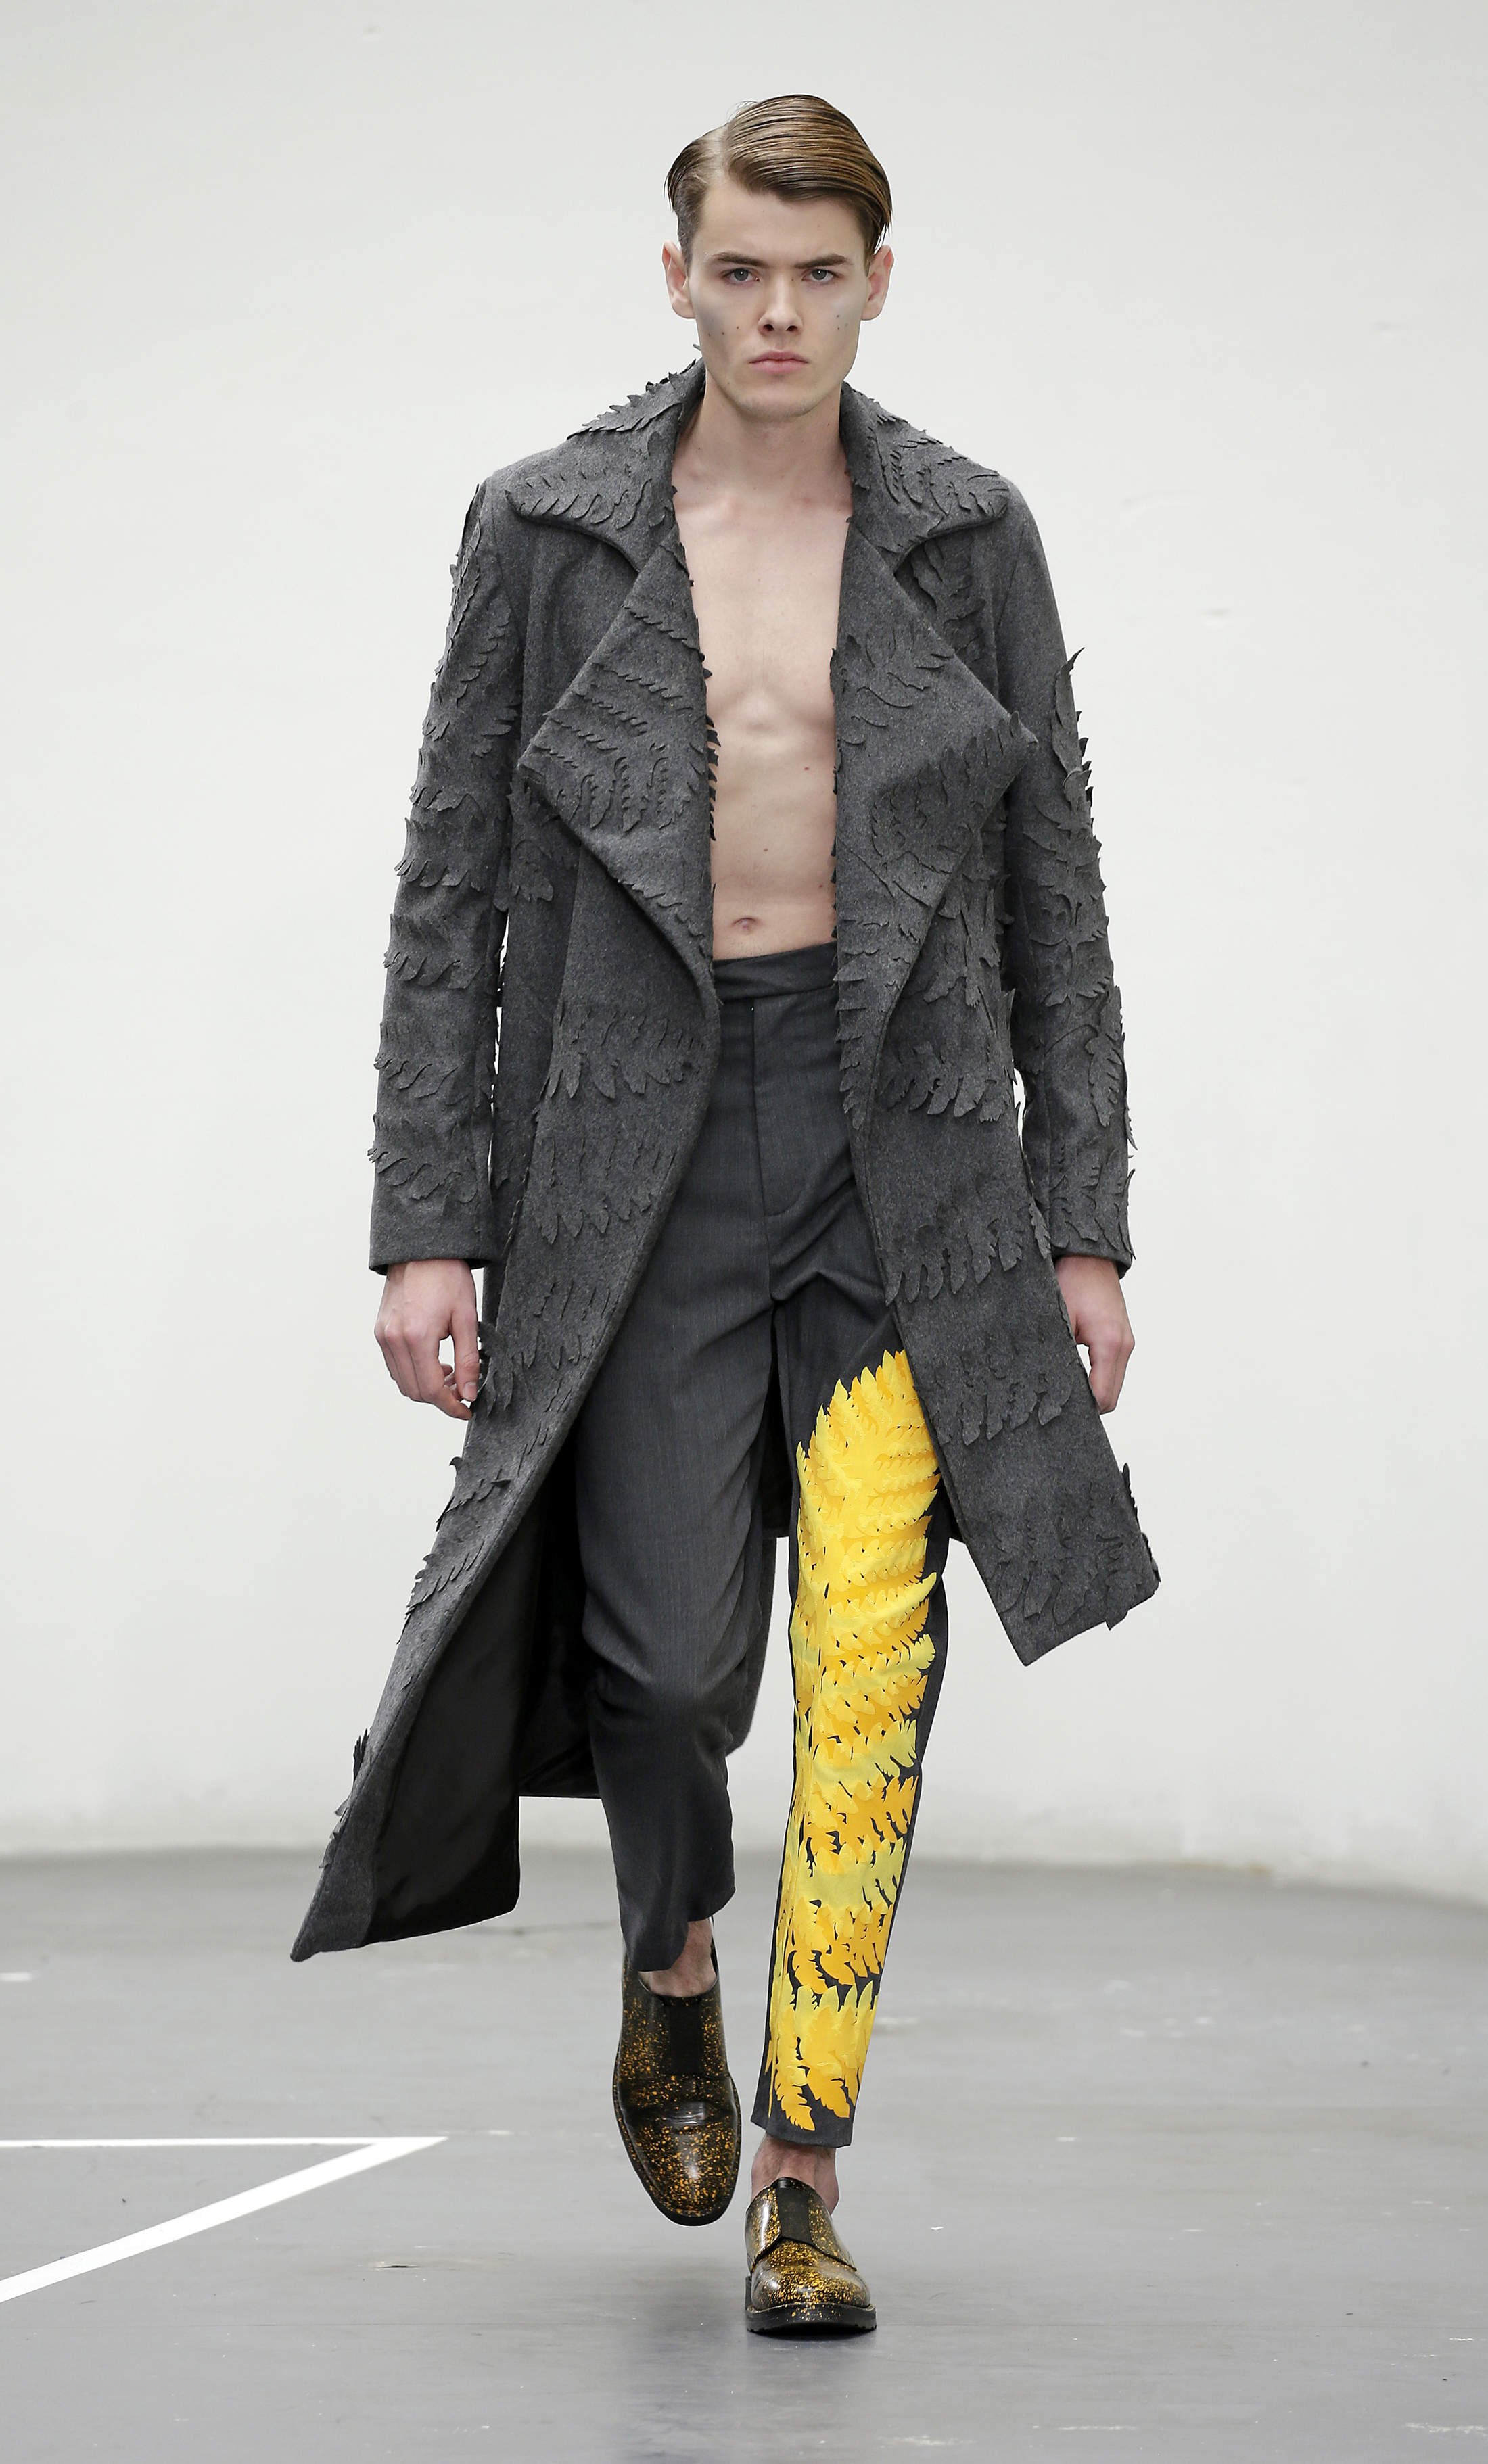 Boaz van Doornik | Arnhem Fashion Design